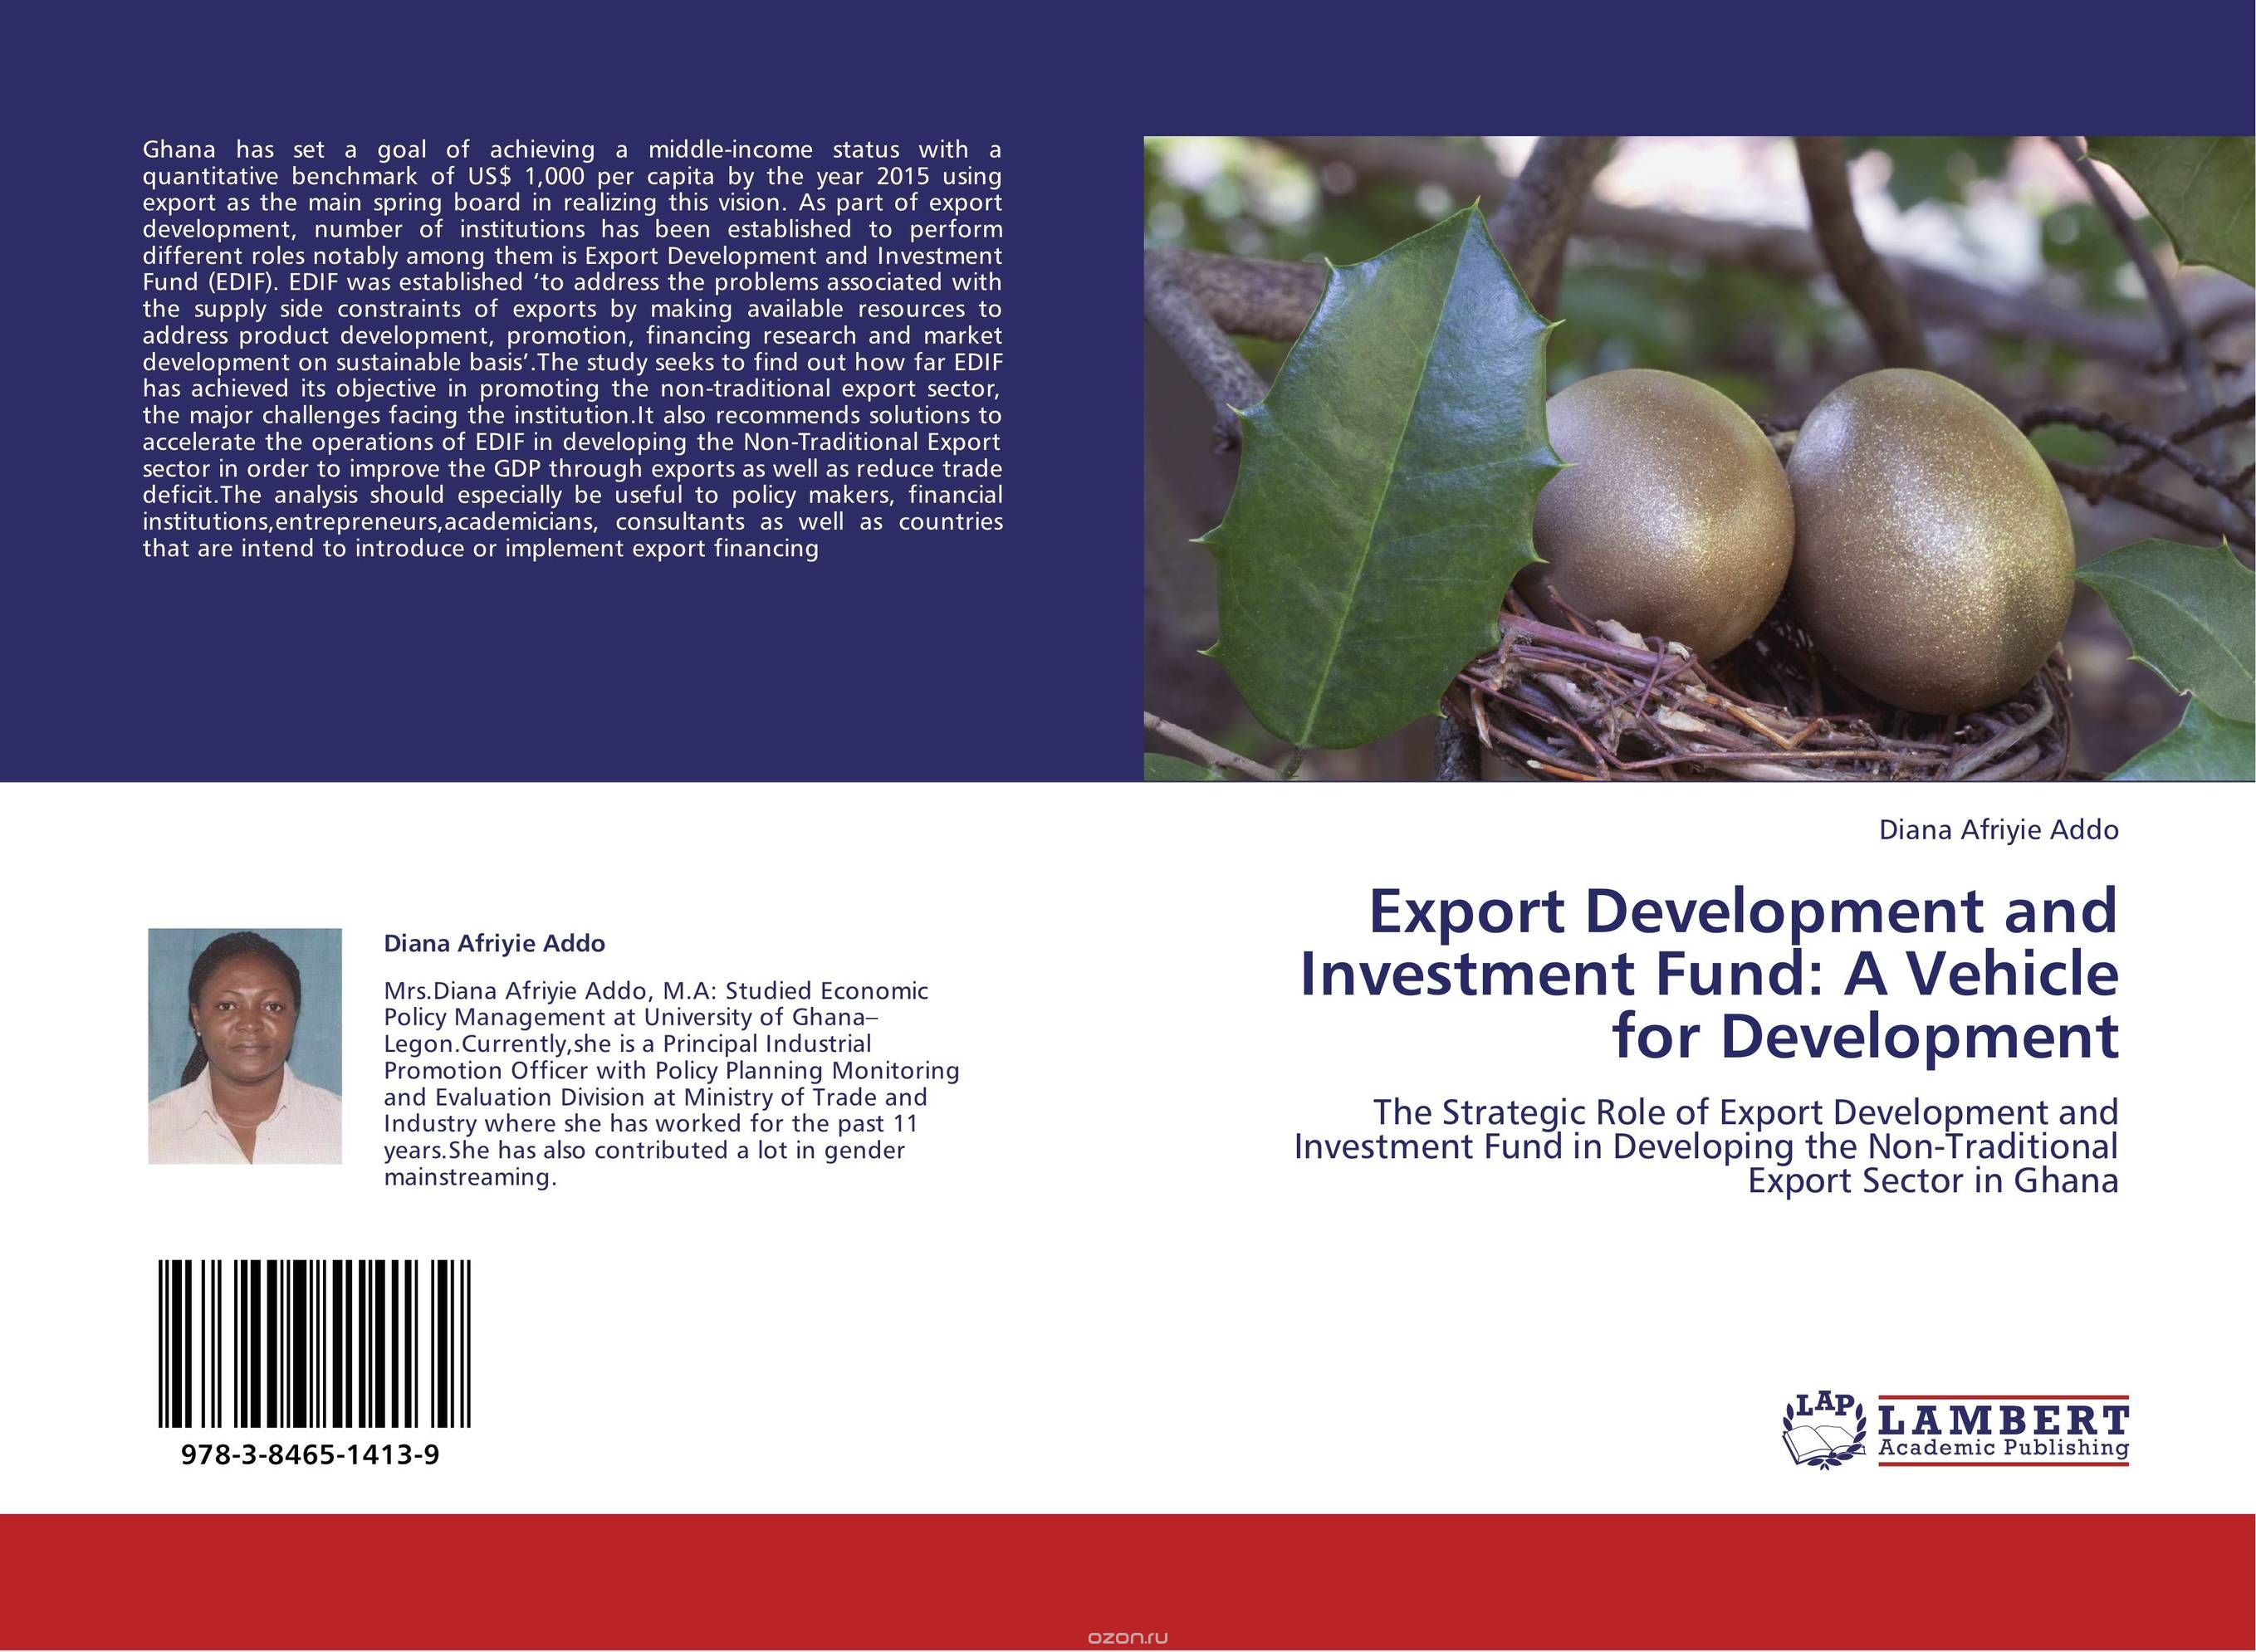 Скачать книгу "Export Development and Investment Fund: A Vehicle for Development"